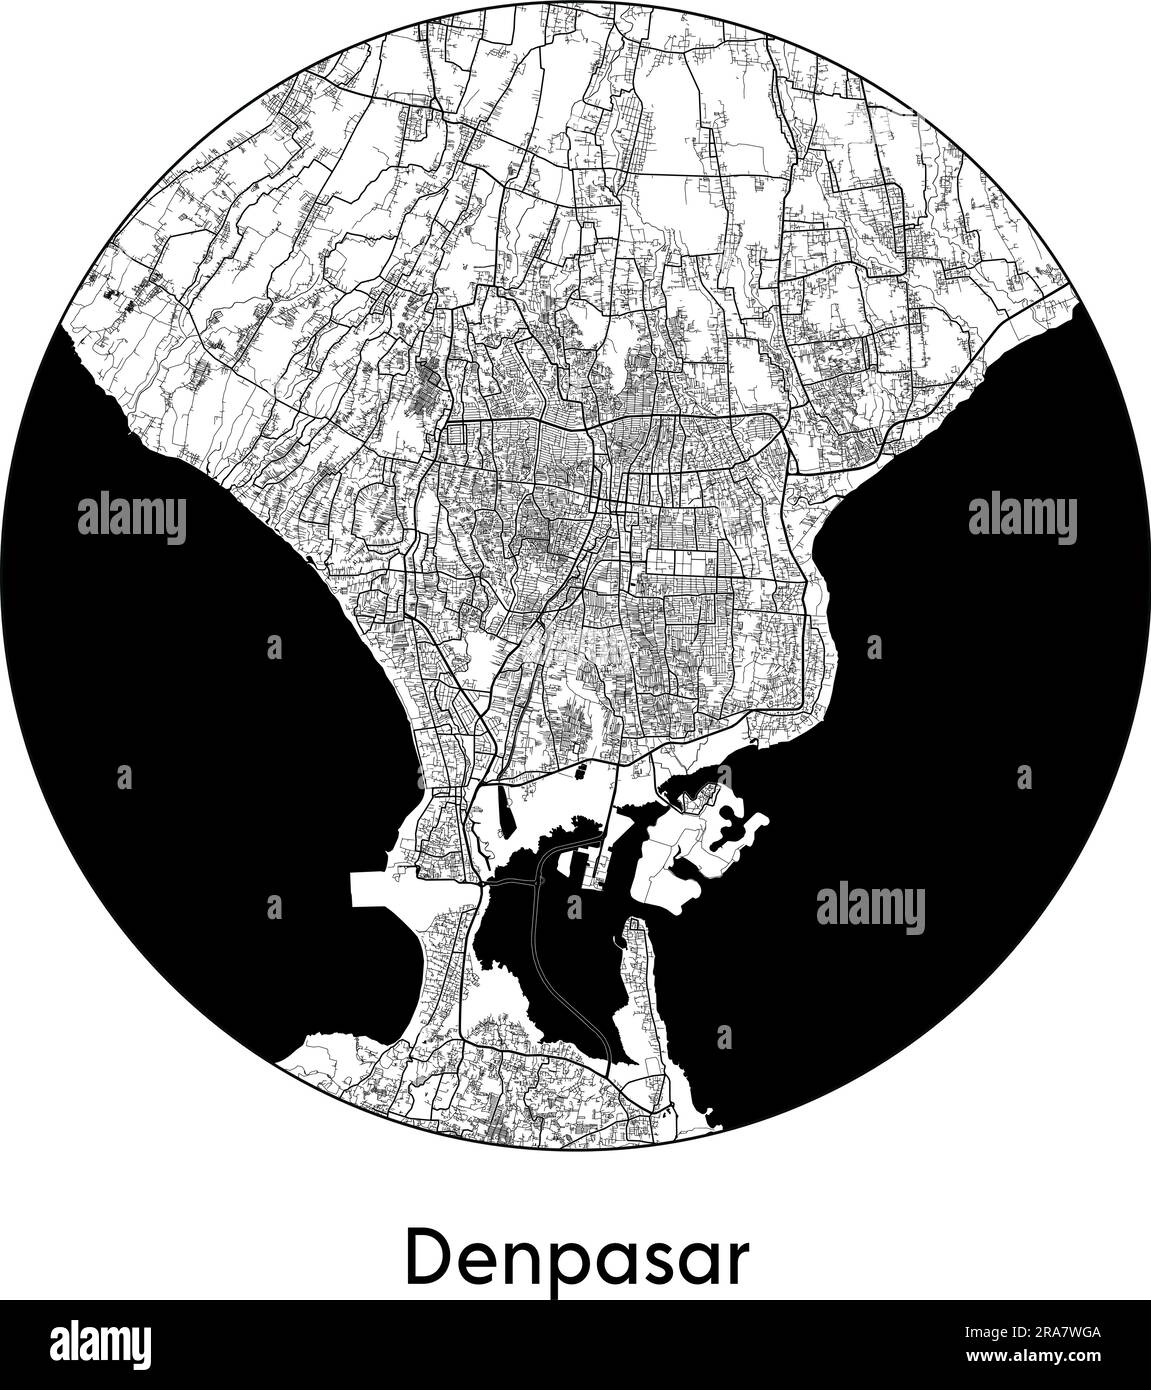 City Map Denpasar Indonesia Asia vector illustration black white Stock ...